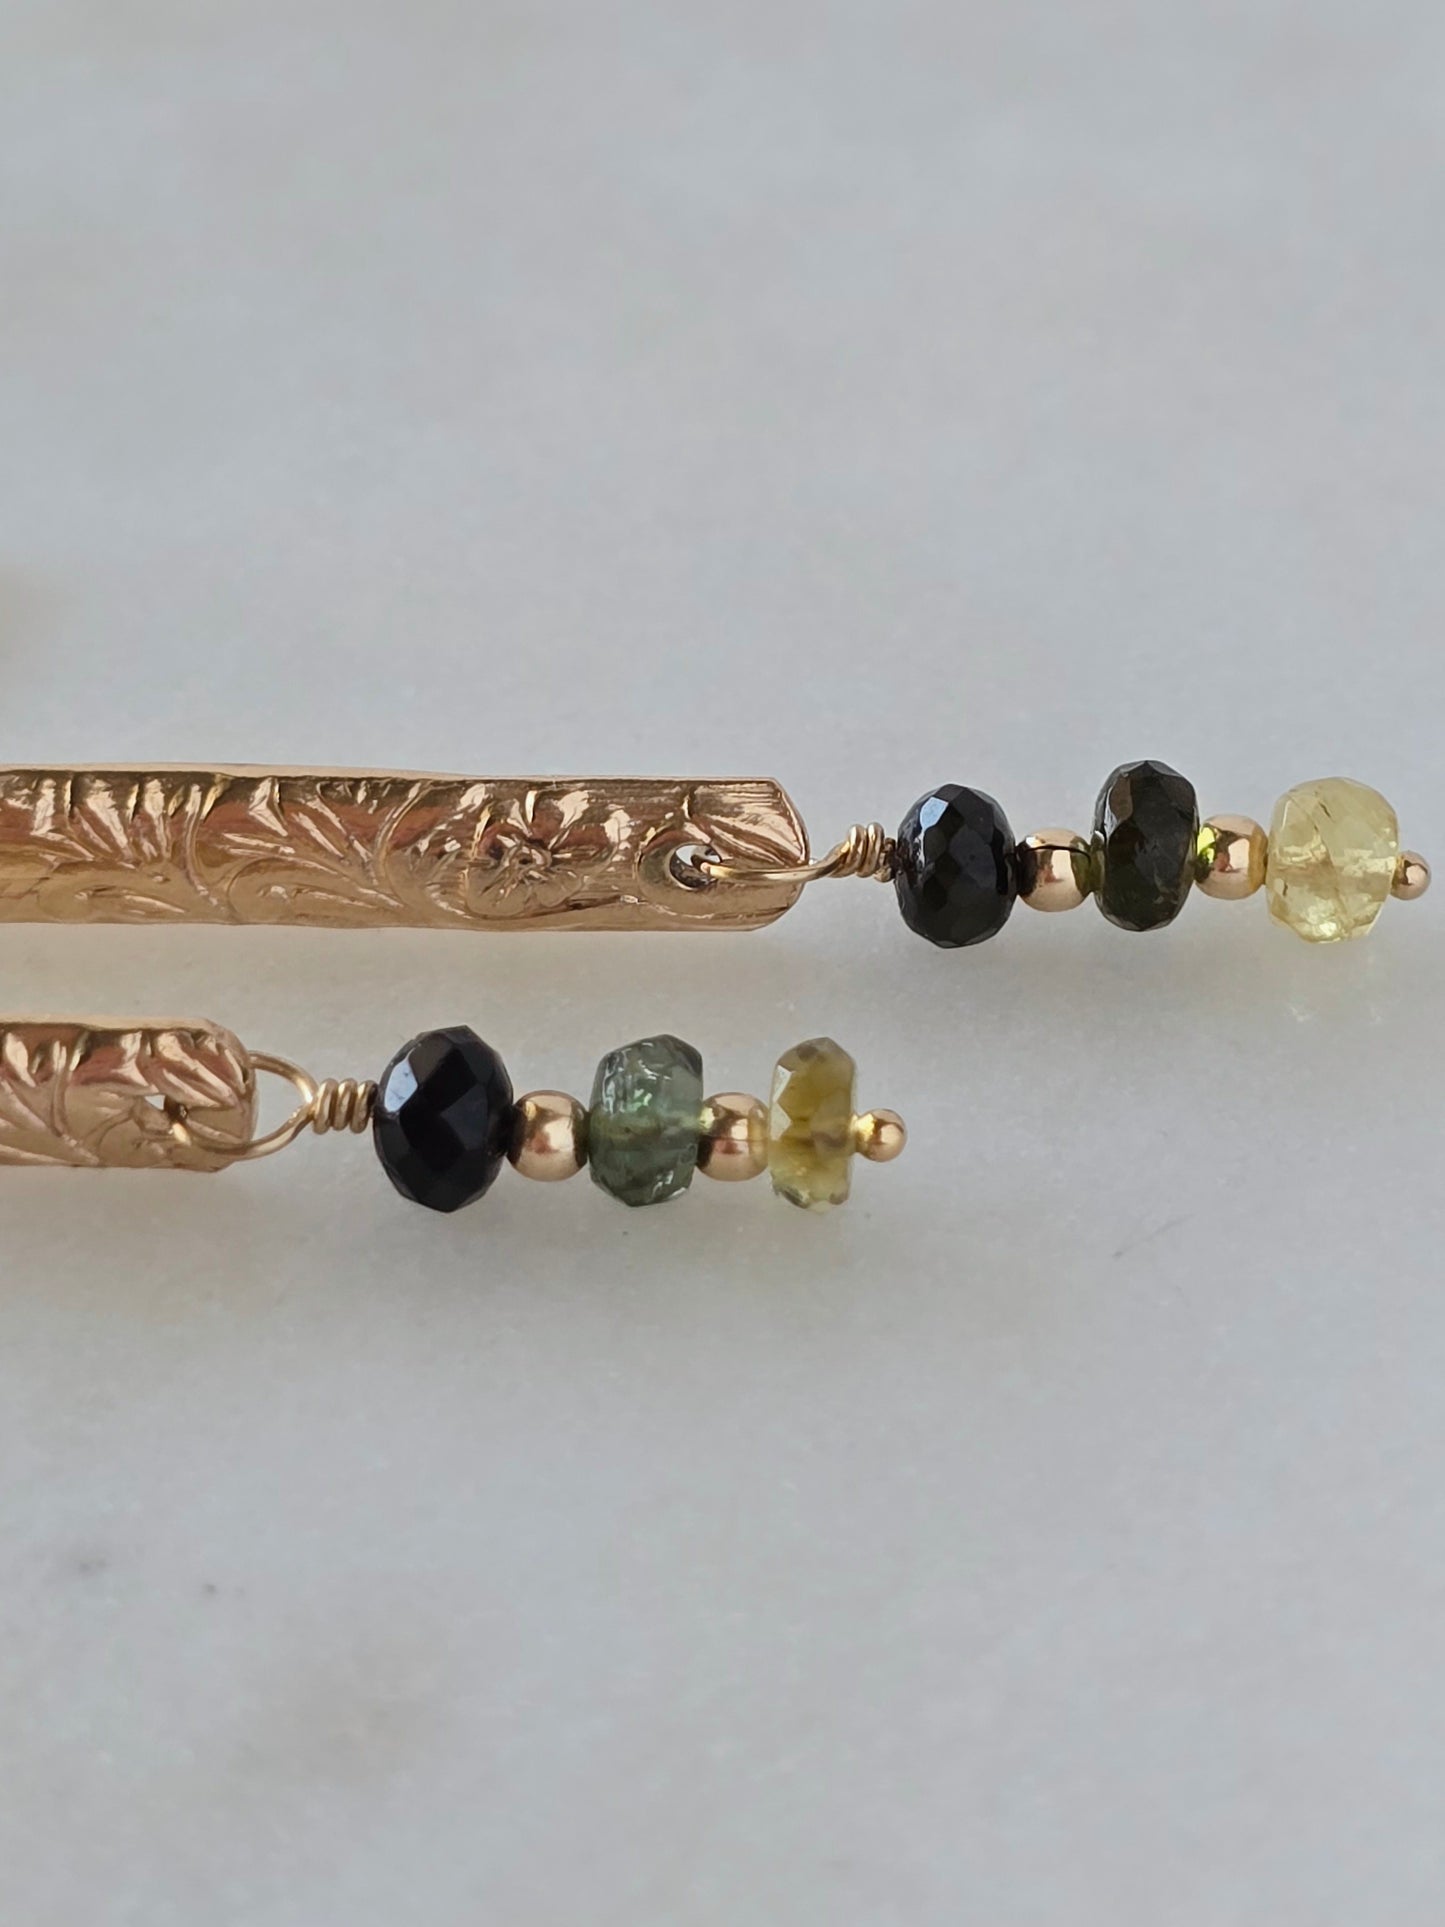 flora 4 - gold tourmaline earrings